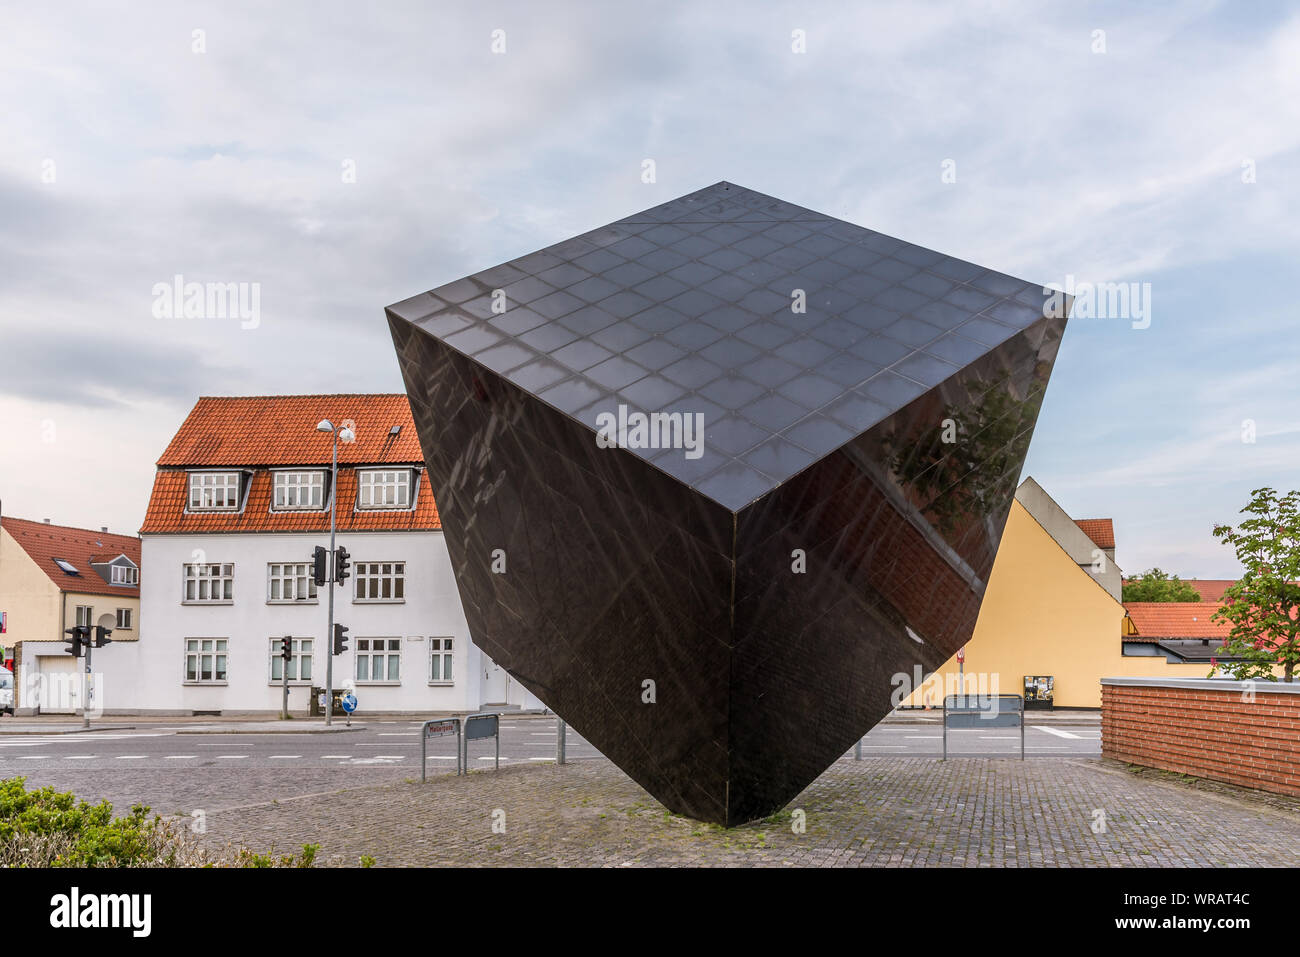 The Black Cube, a gigant sculpture in Svendborg, Denmark, July 10, 2019 Stock Photo